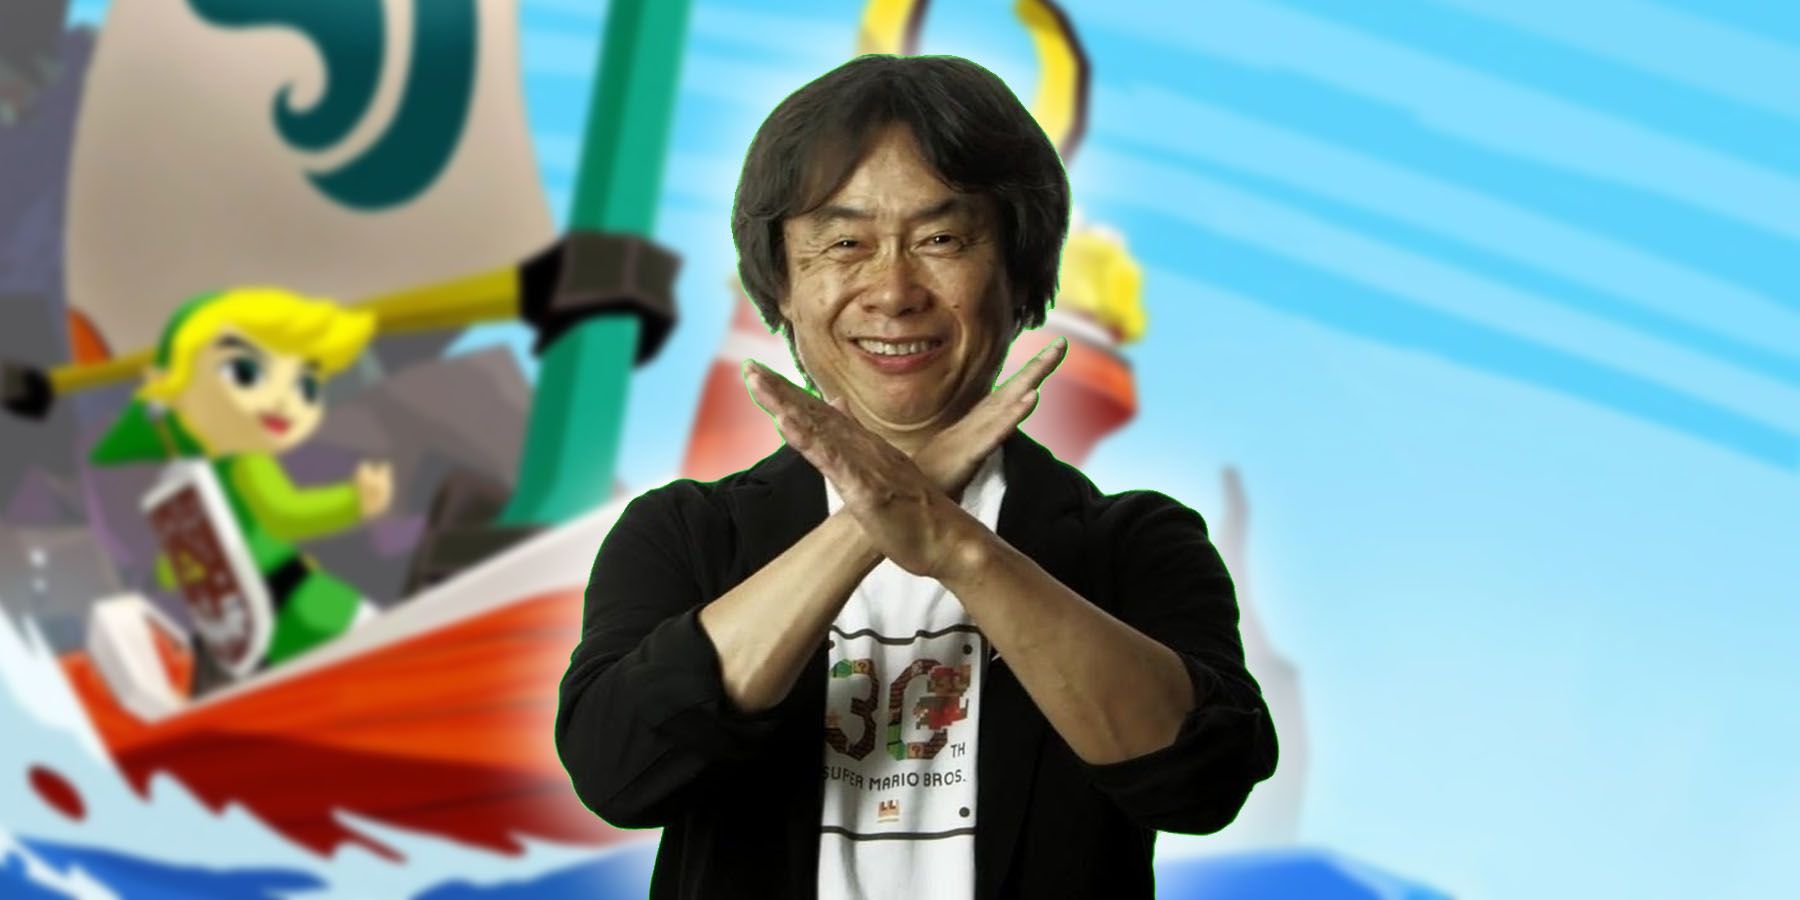 TIL Creator of Super Mario and The Legend of Zelda, Shigeru